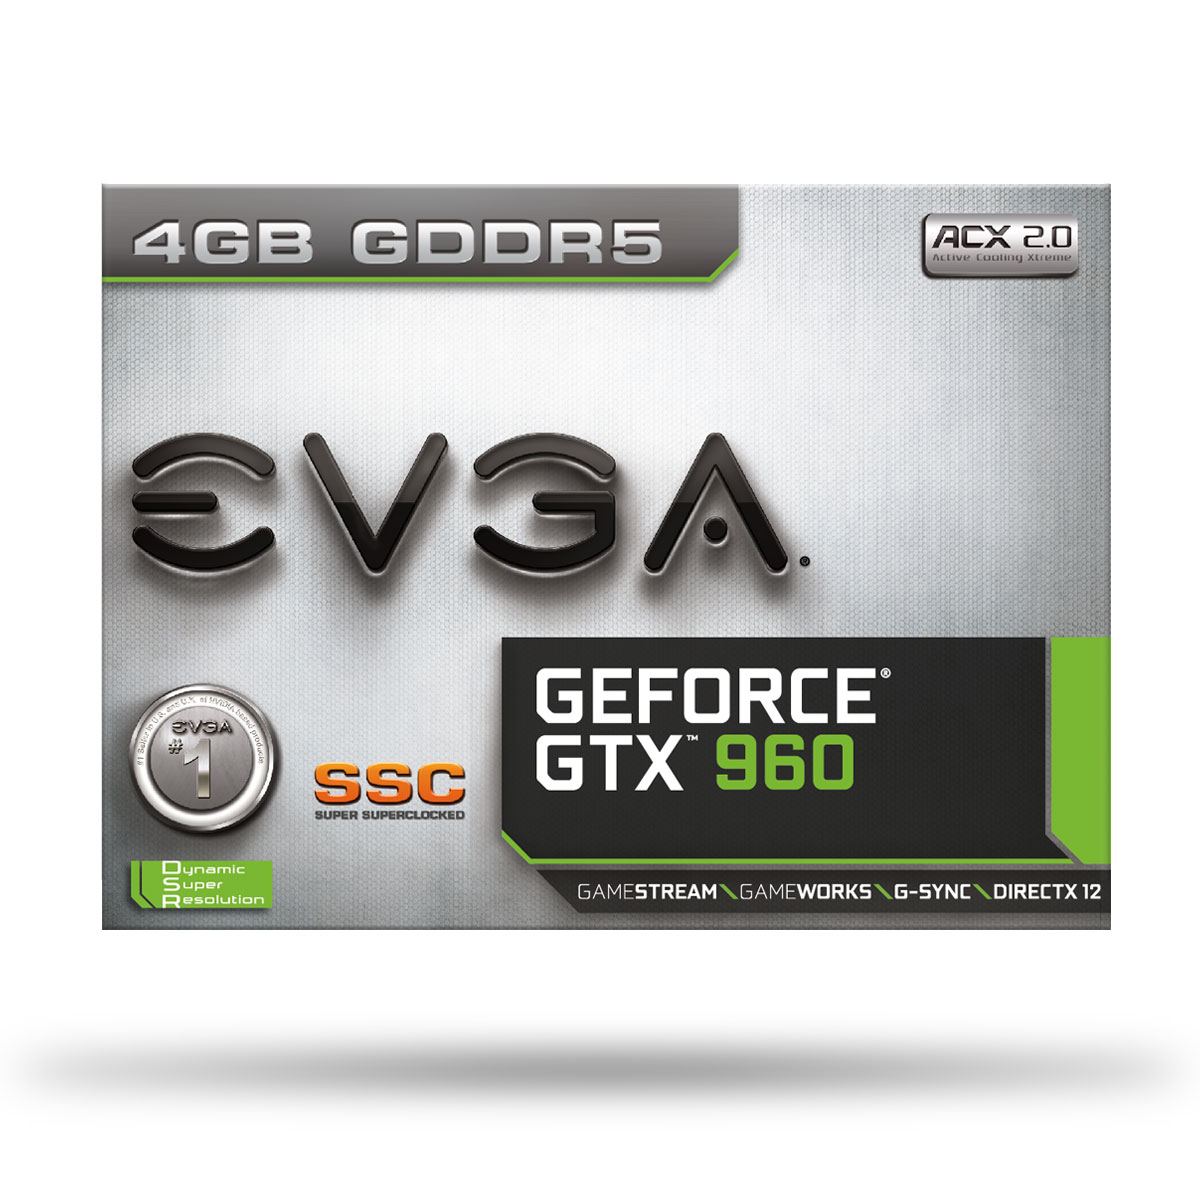 Evga Articles Evga Geforce Gtx 960 4gb